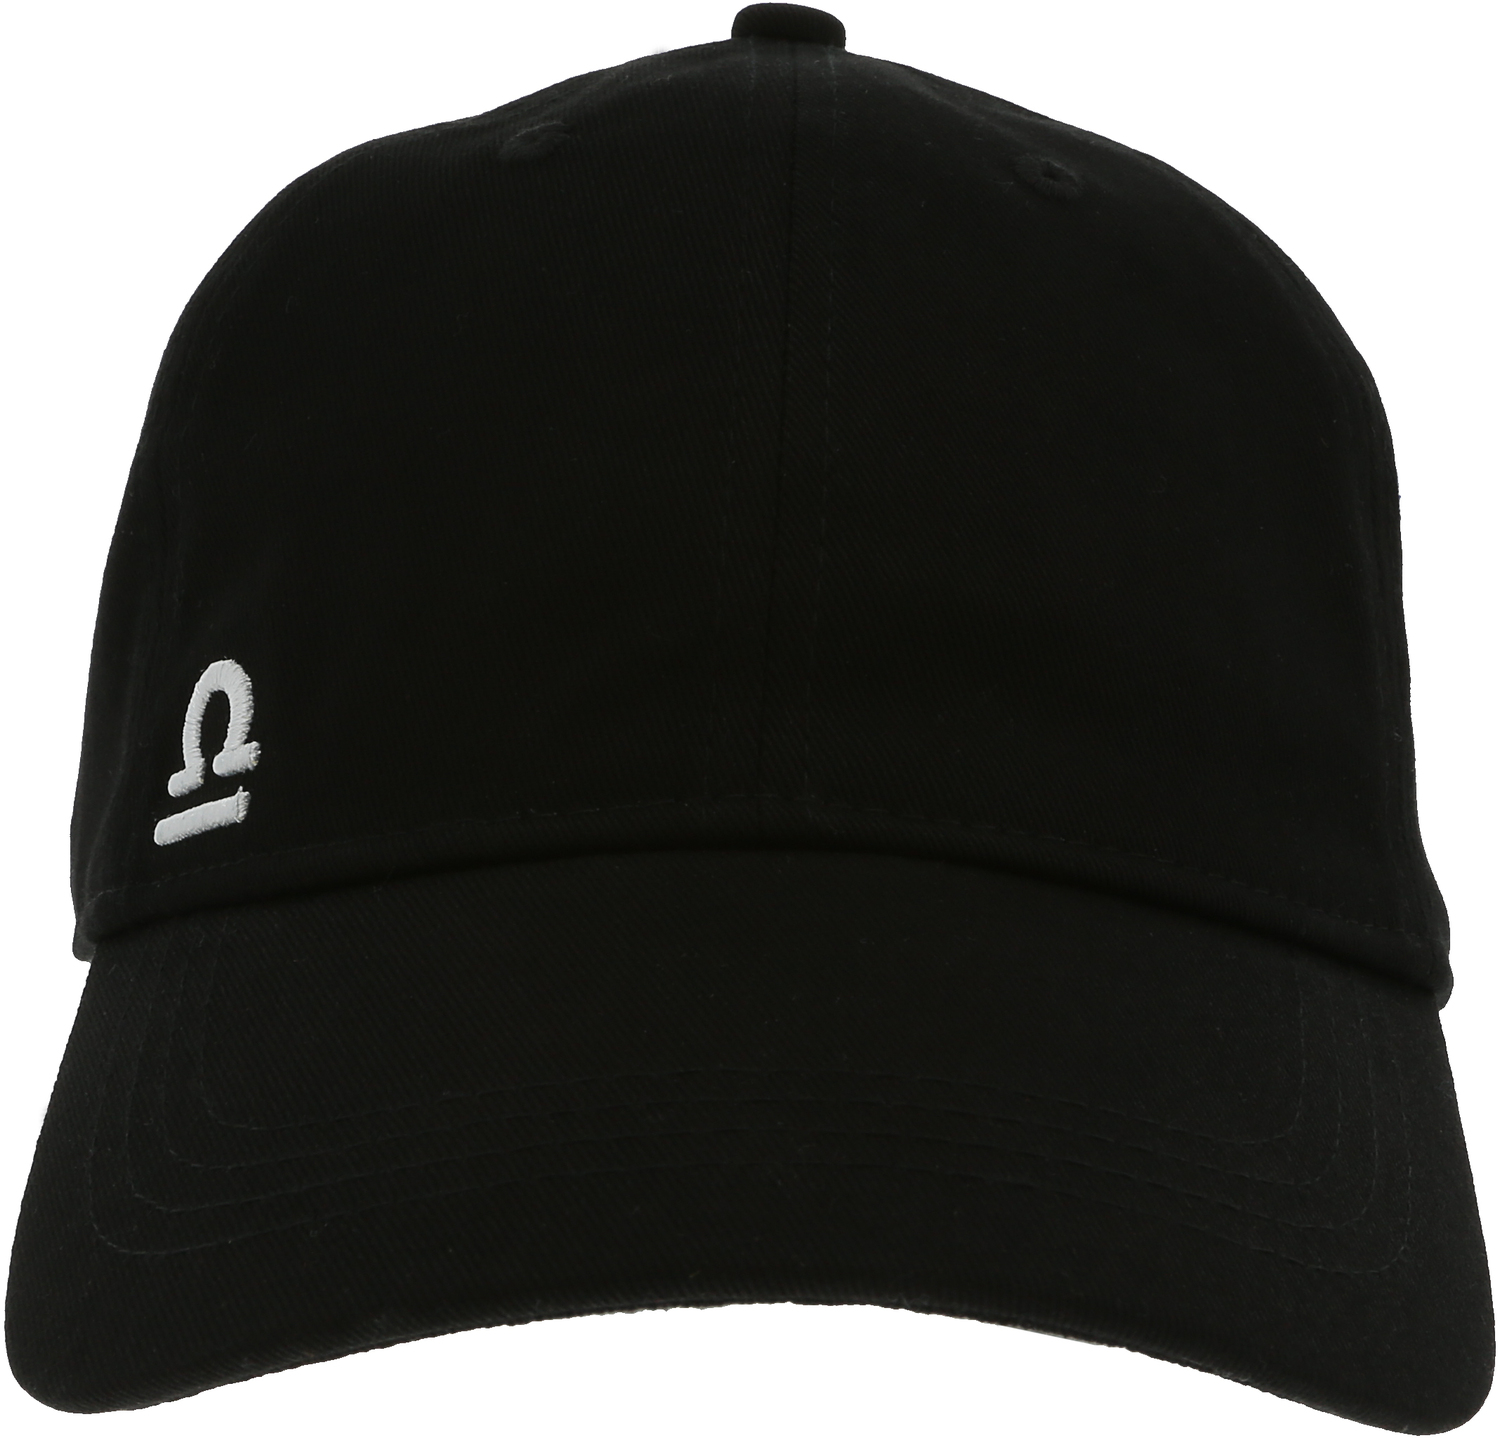 Libra by You Are a Gem - Libra - Black Adjustable Hat